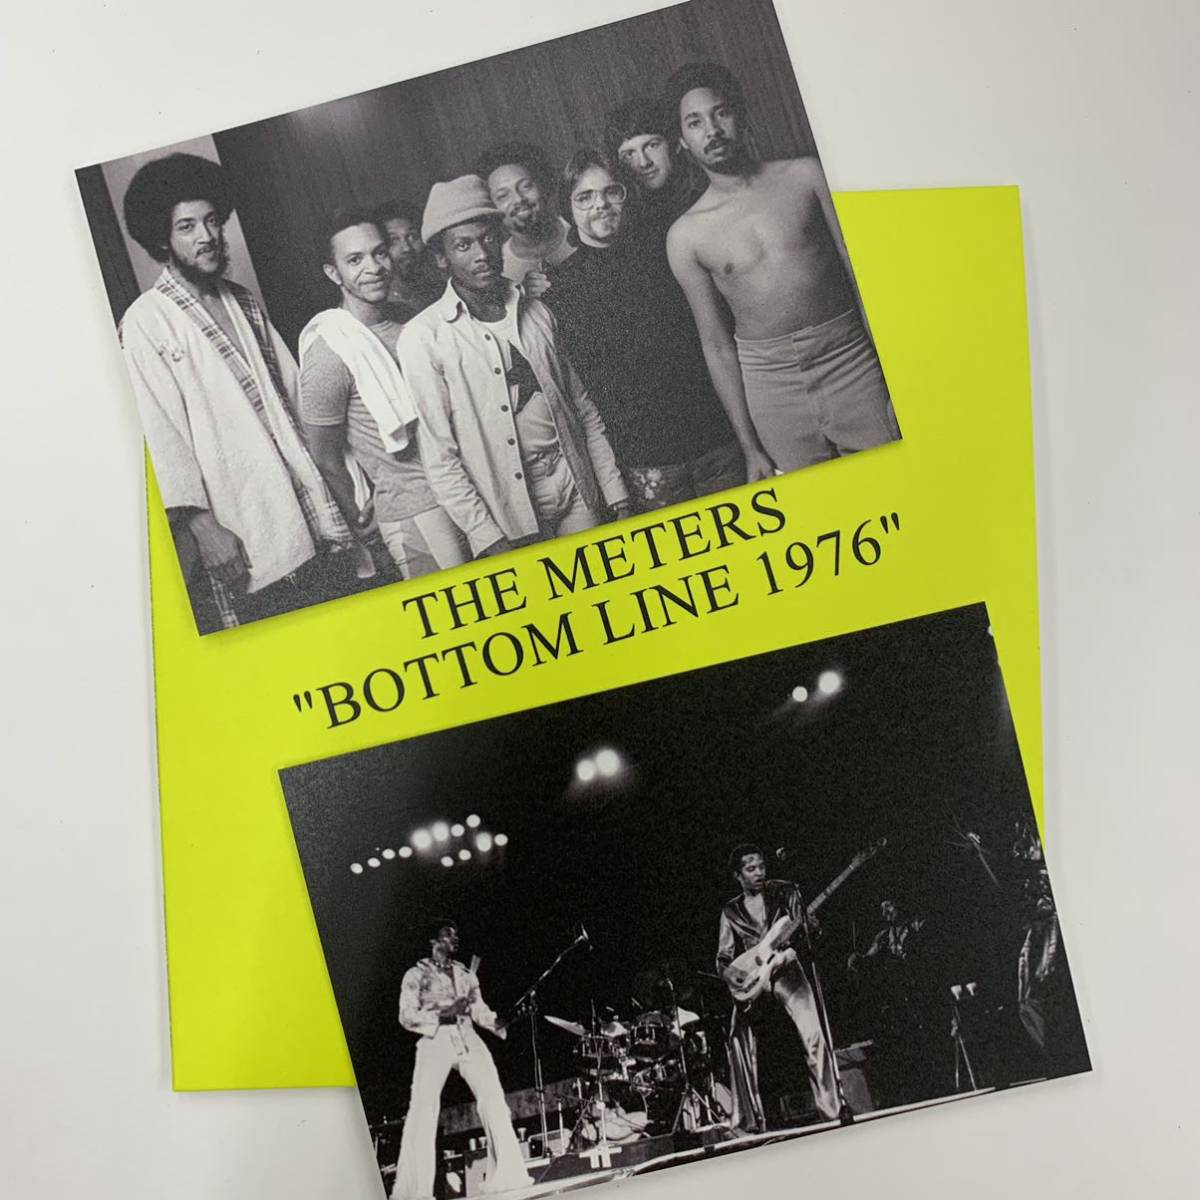 THE METERS / BOTTOM LINE 1976「燃えろミーターズ」CD 超高音質サウンドボード！絶頂の最高のライヴと断言できる名演！！聴いて欲しいー！_画像6